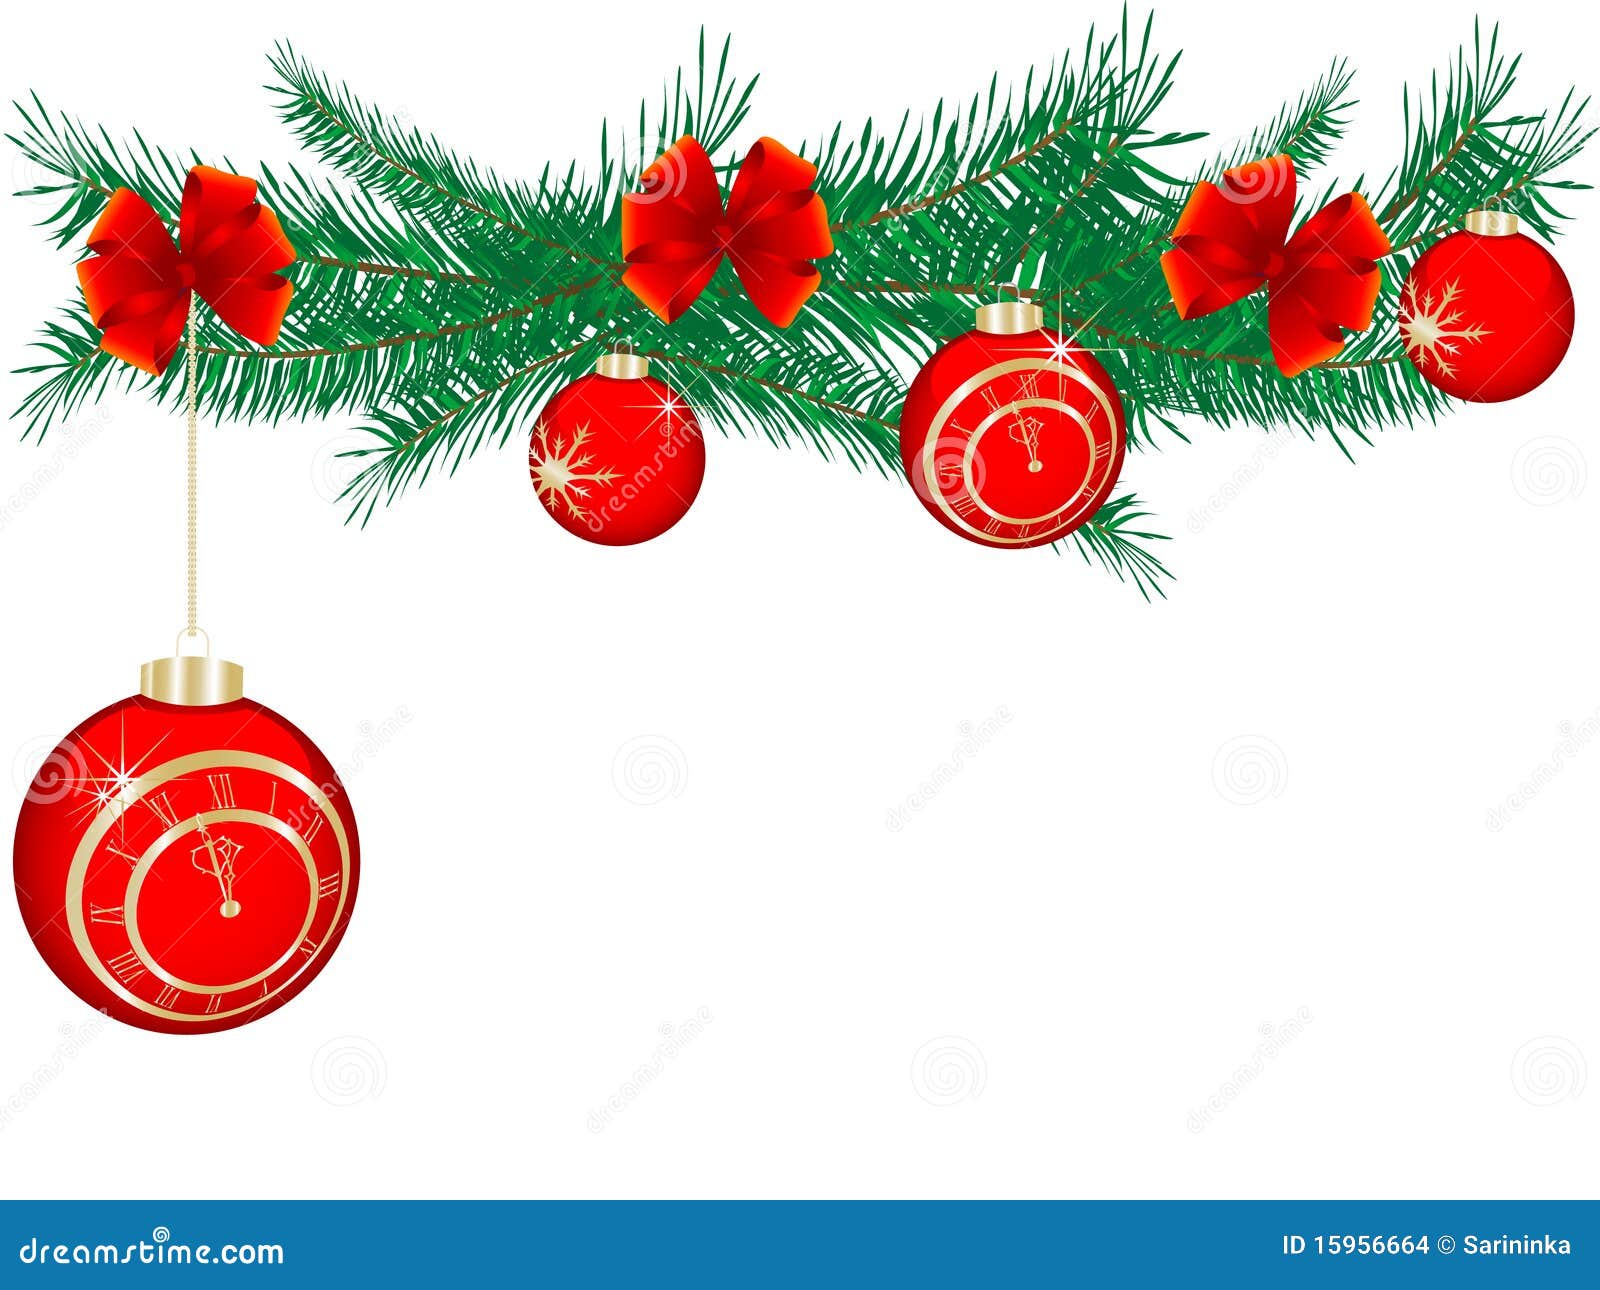 Christmas garland stock vector. Illustration of artwork - 15956664